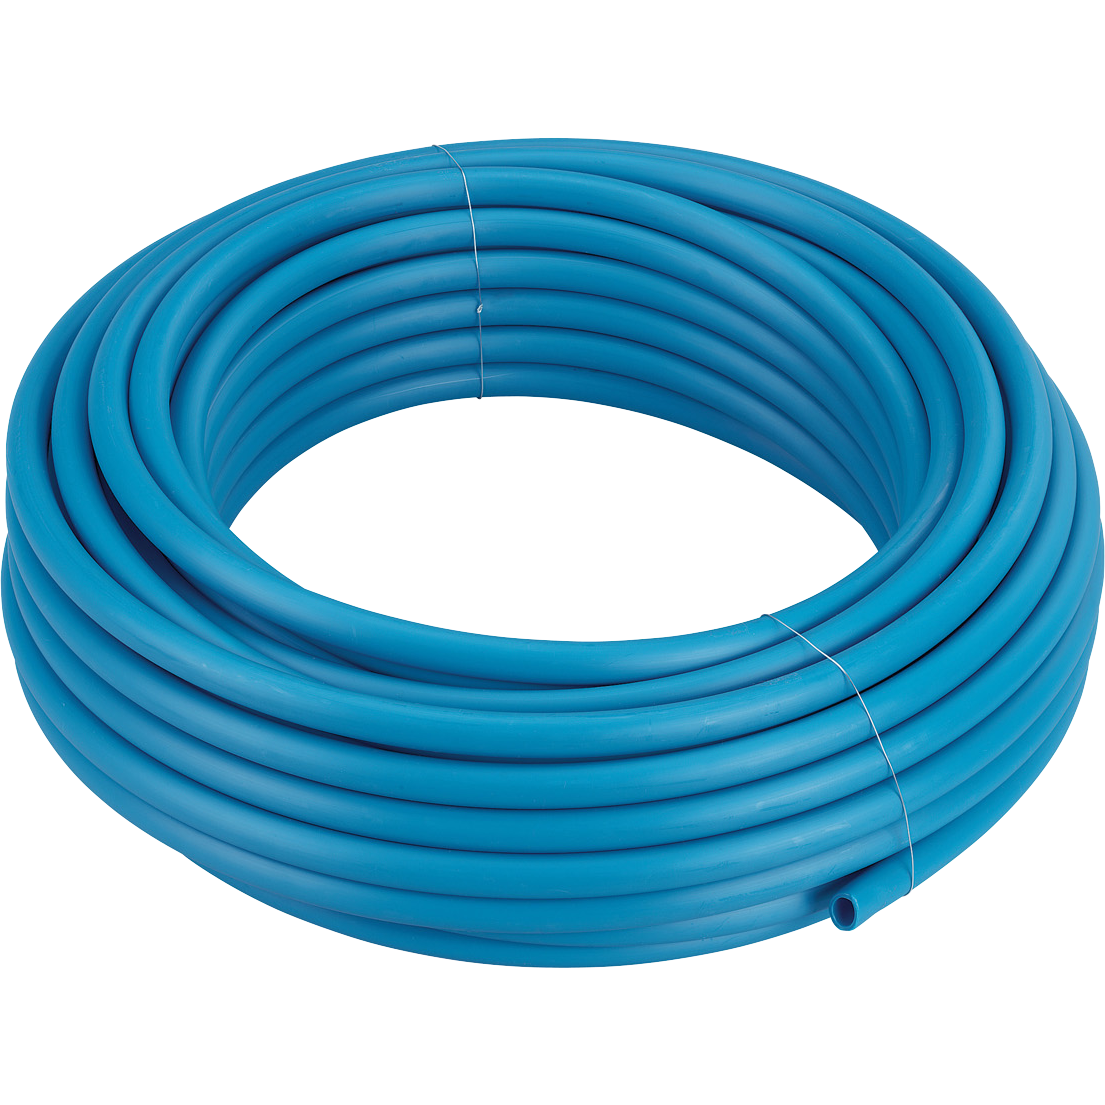 PVC Pipes - Orbit Cables